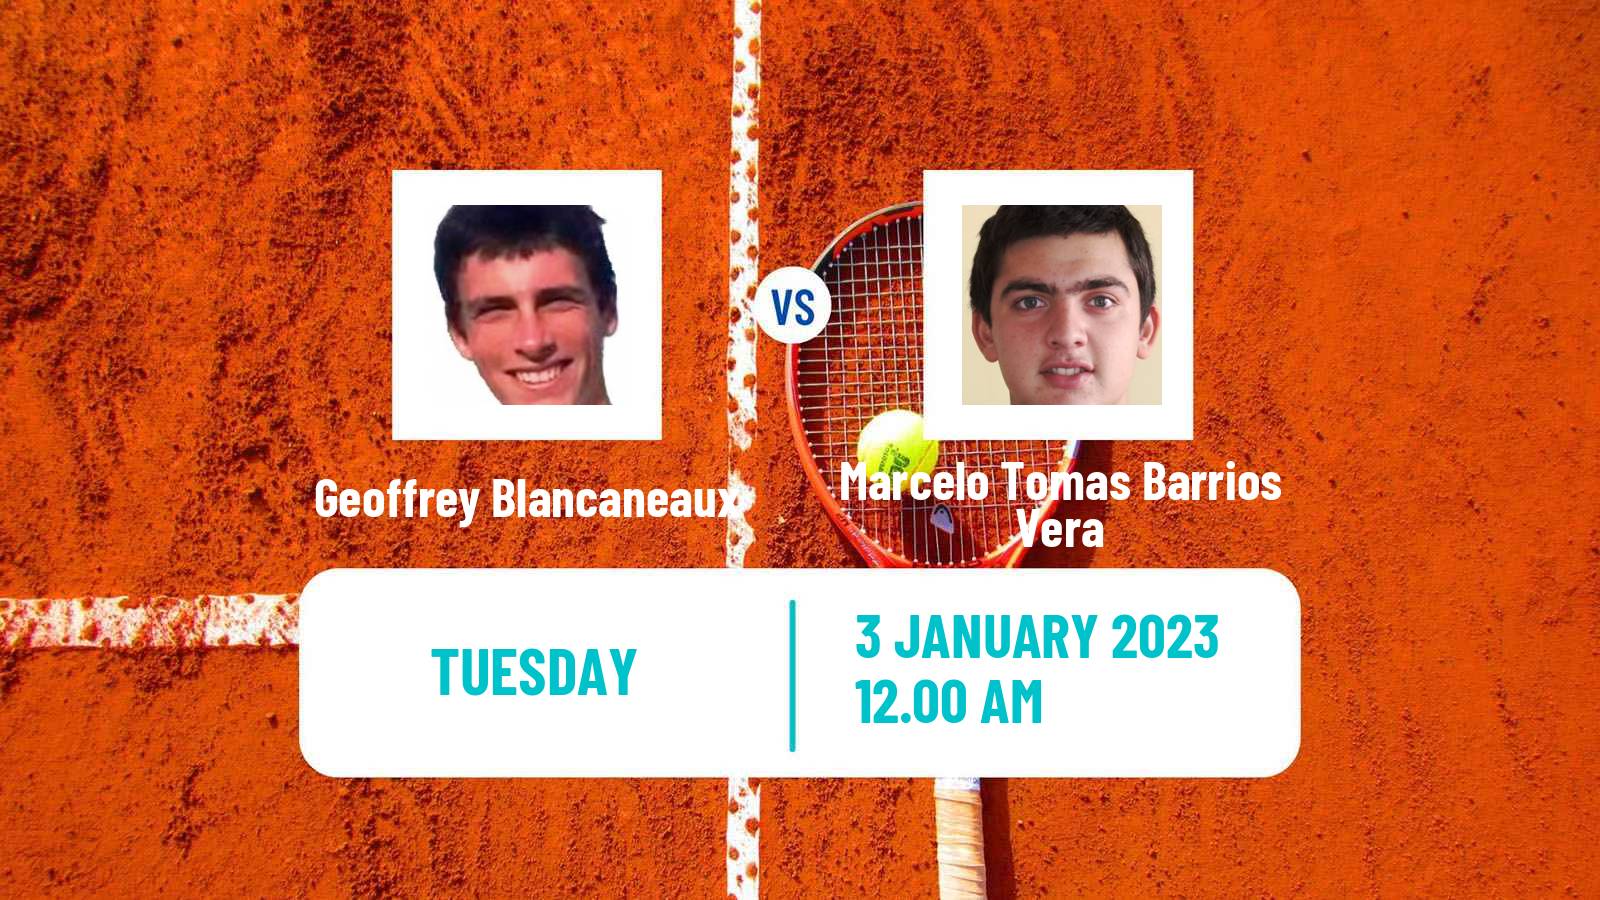 Tennis ATP Challenger Geoffrey Blancaneaux - Marcelo Tomas Barrios Vera